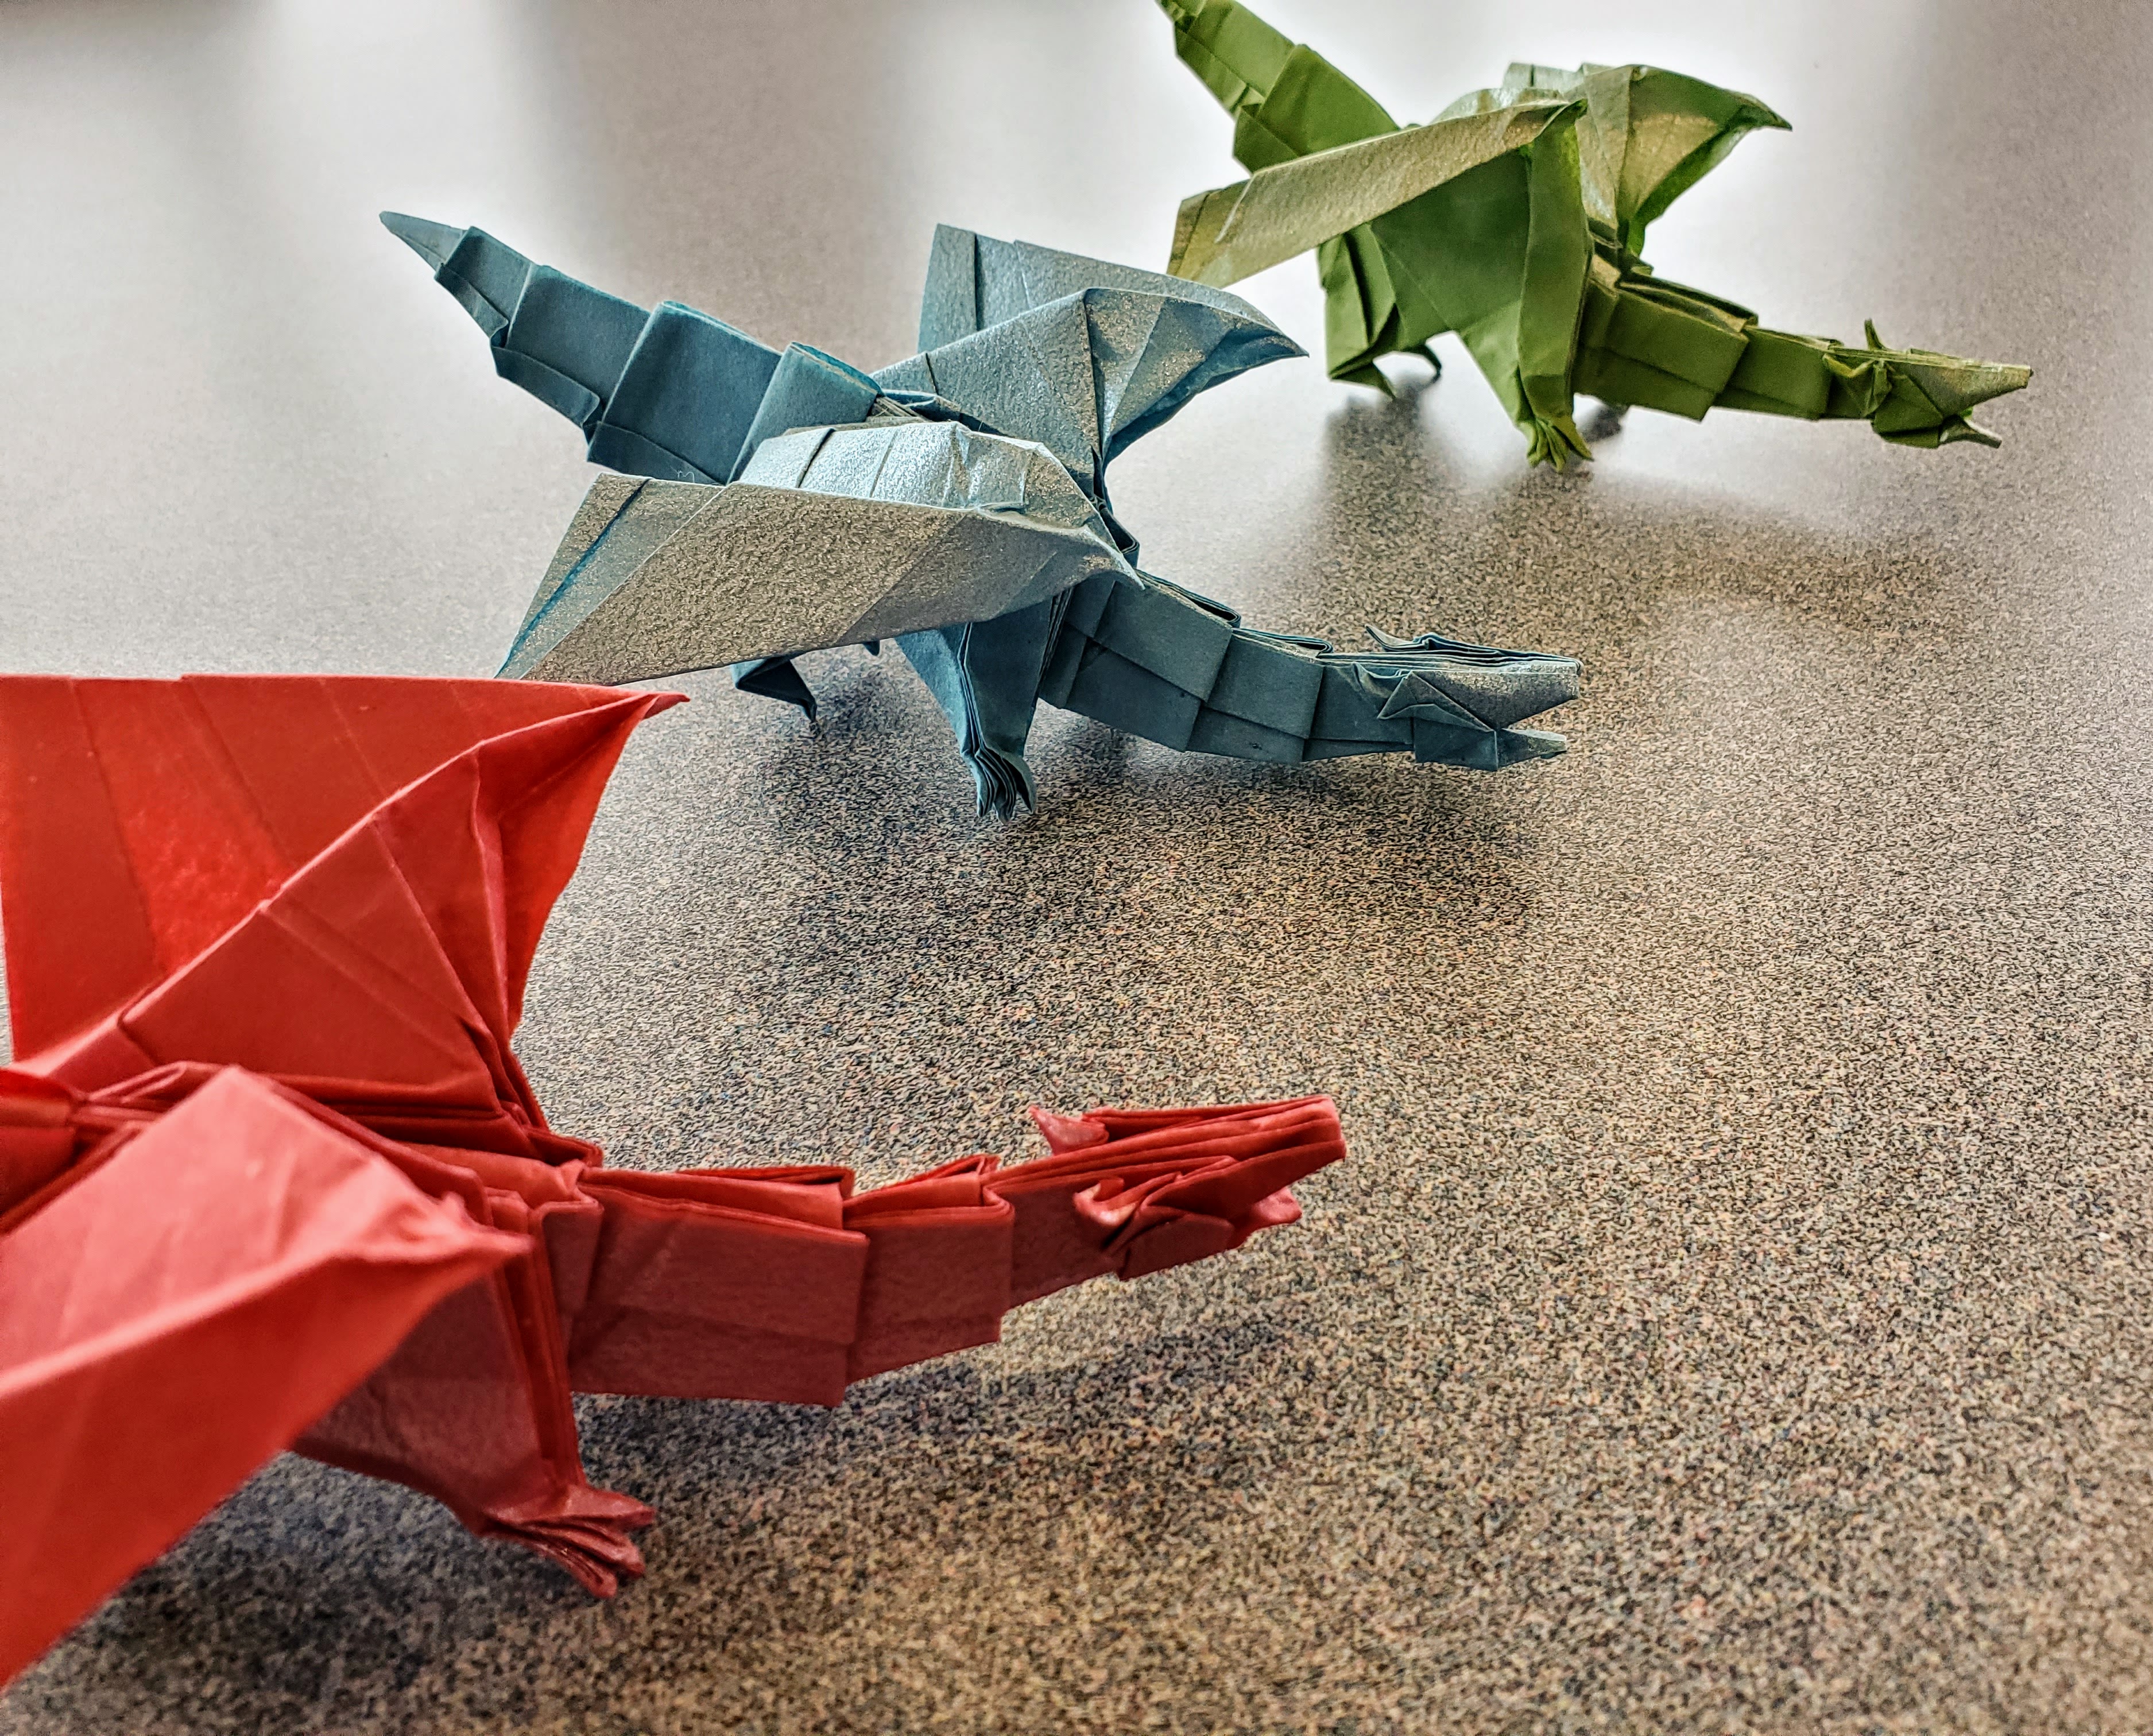 Three colorful oragami dragons